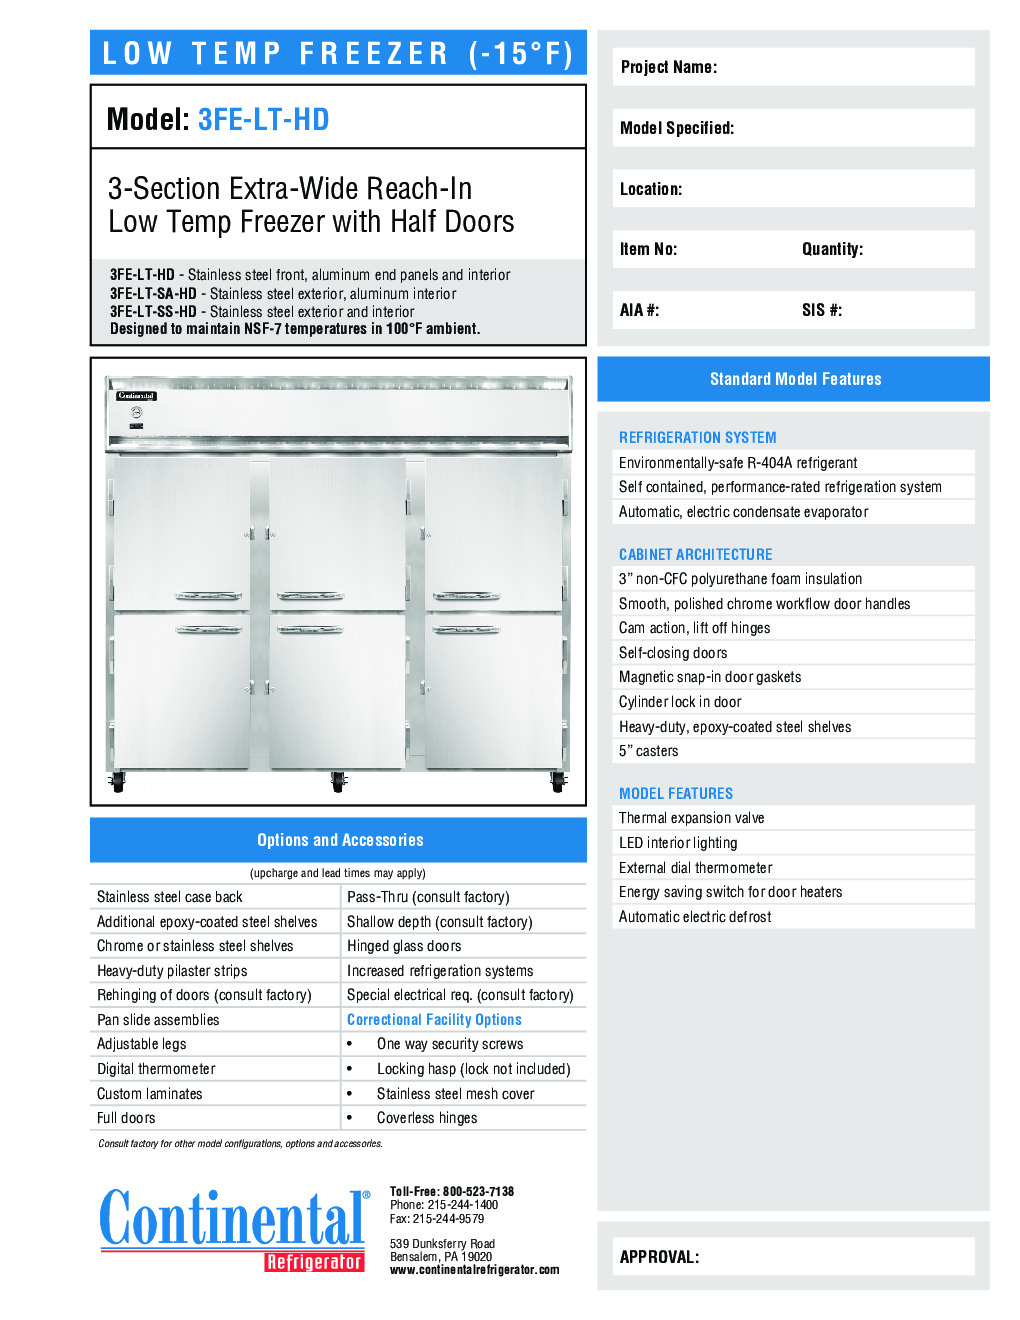 Continental Refrigerator 3FE-LT-HD Reach-In Low Temperature Freezer